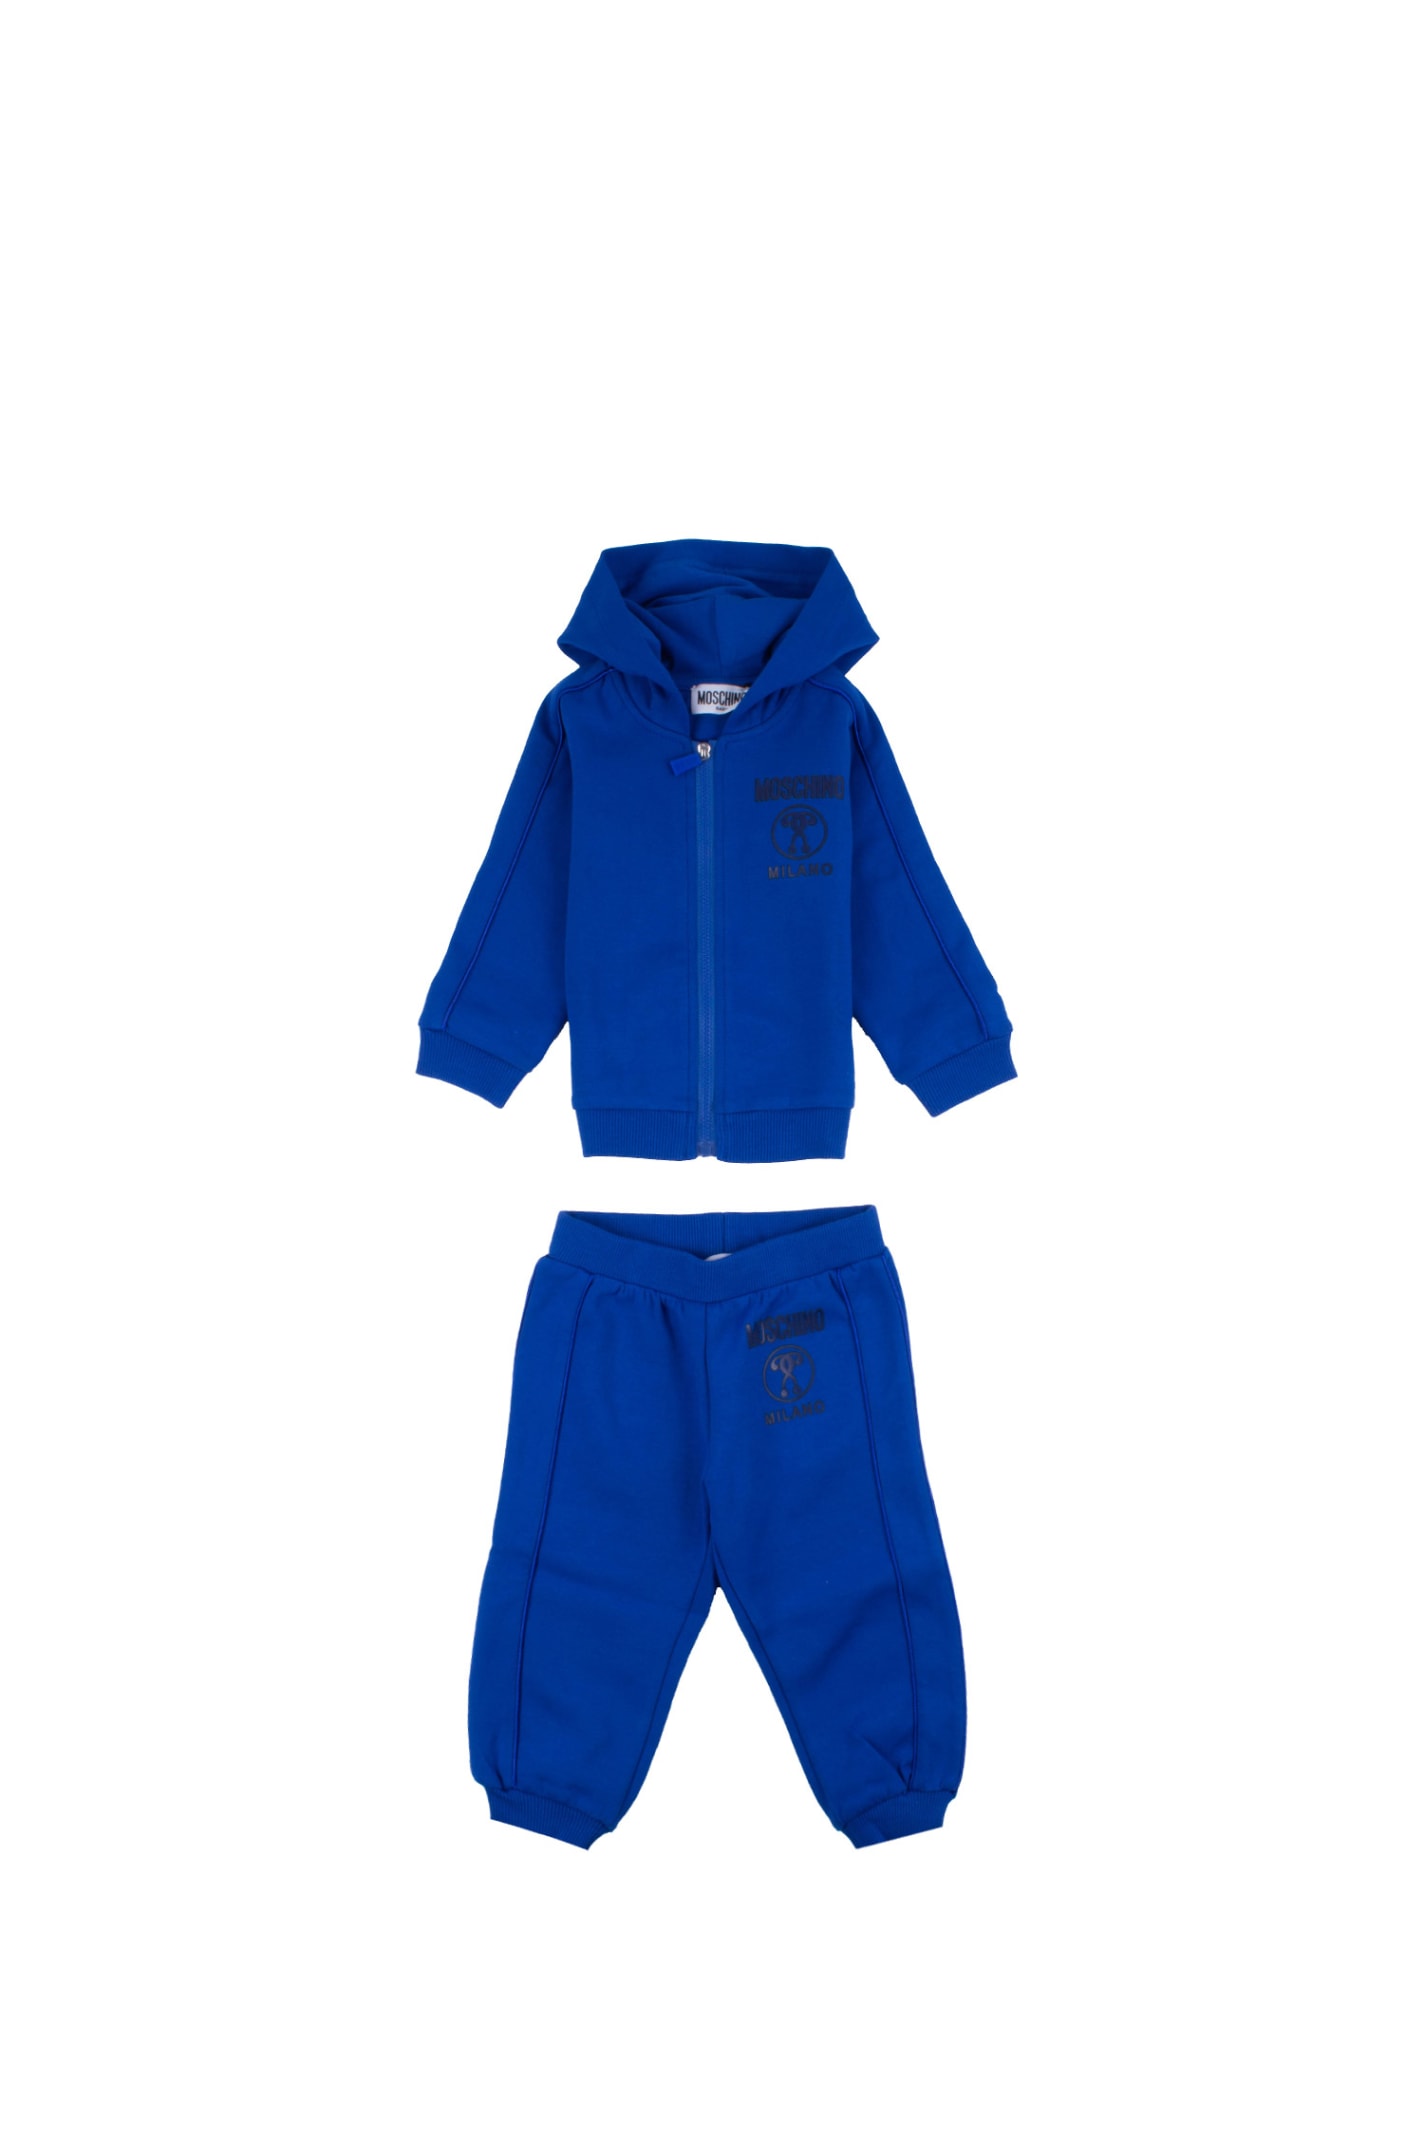 Moschino Babies' Cotton Sweatshirt And Sweatpants In Blue